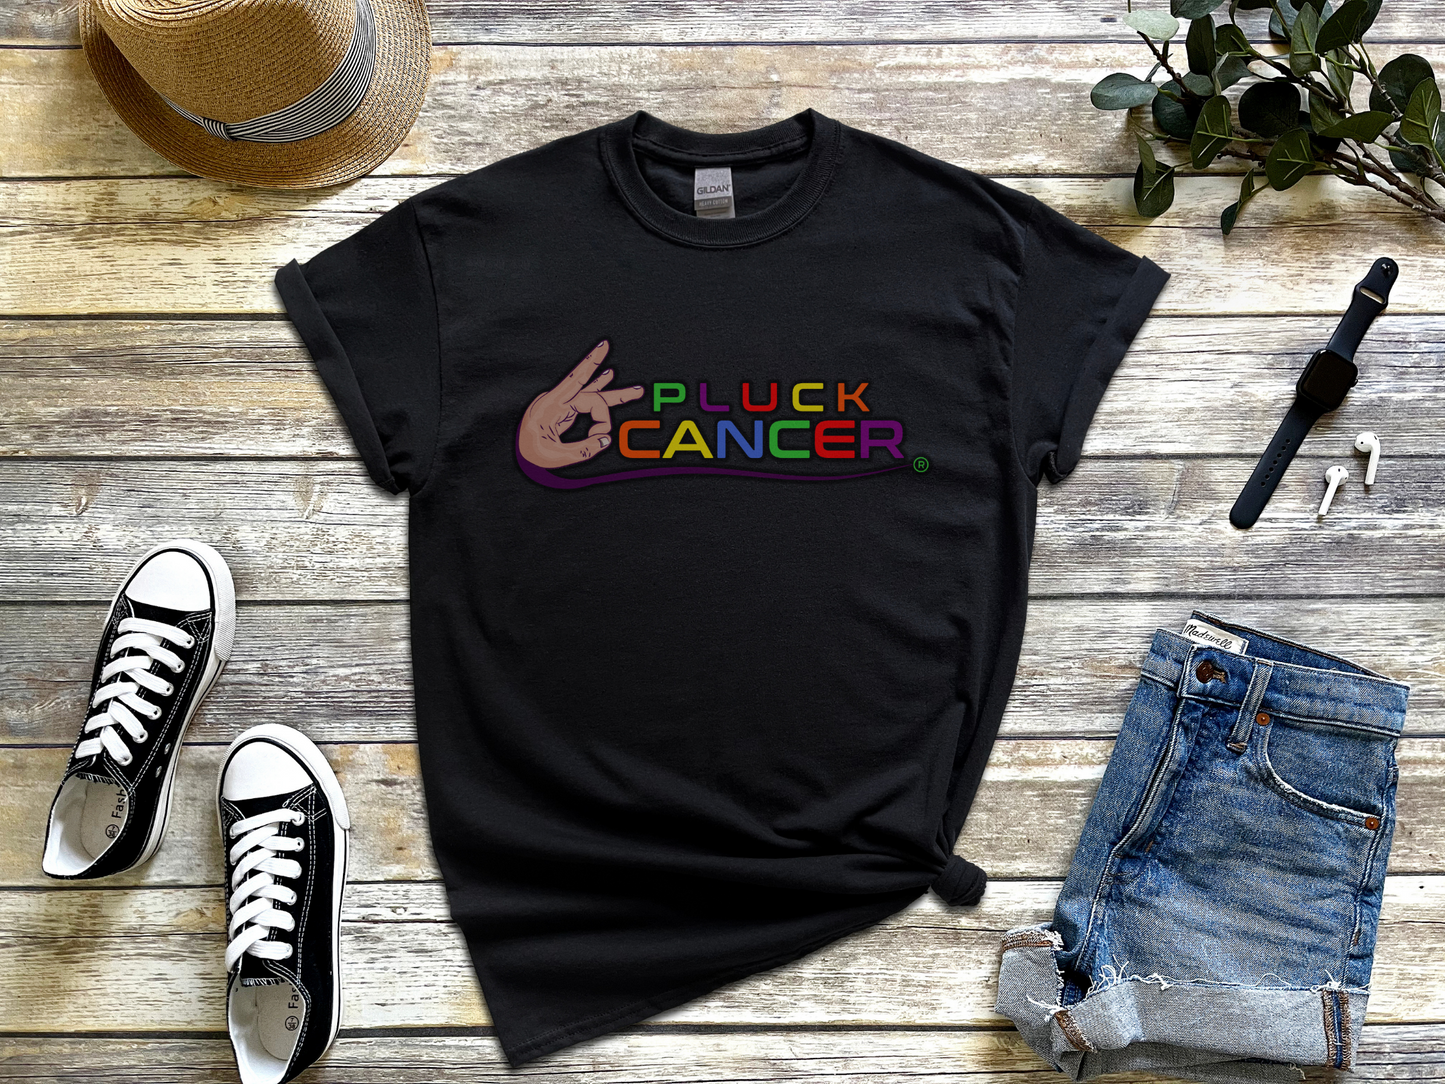 Pluck Cancer Women's Cotton T-Shirt - Black